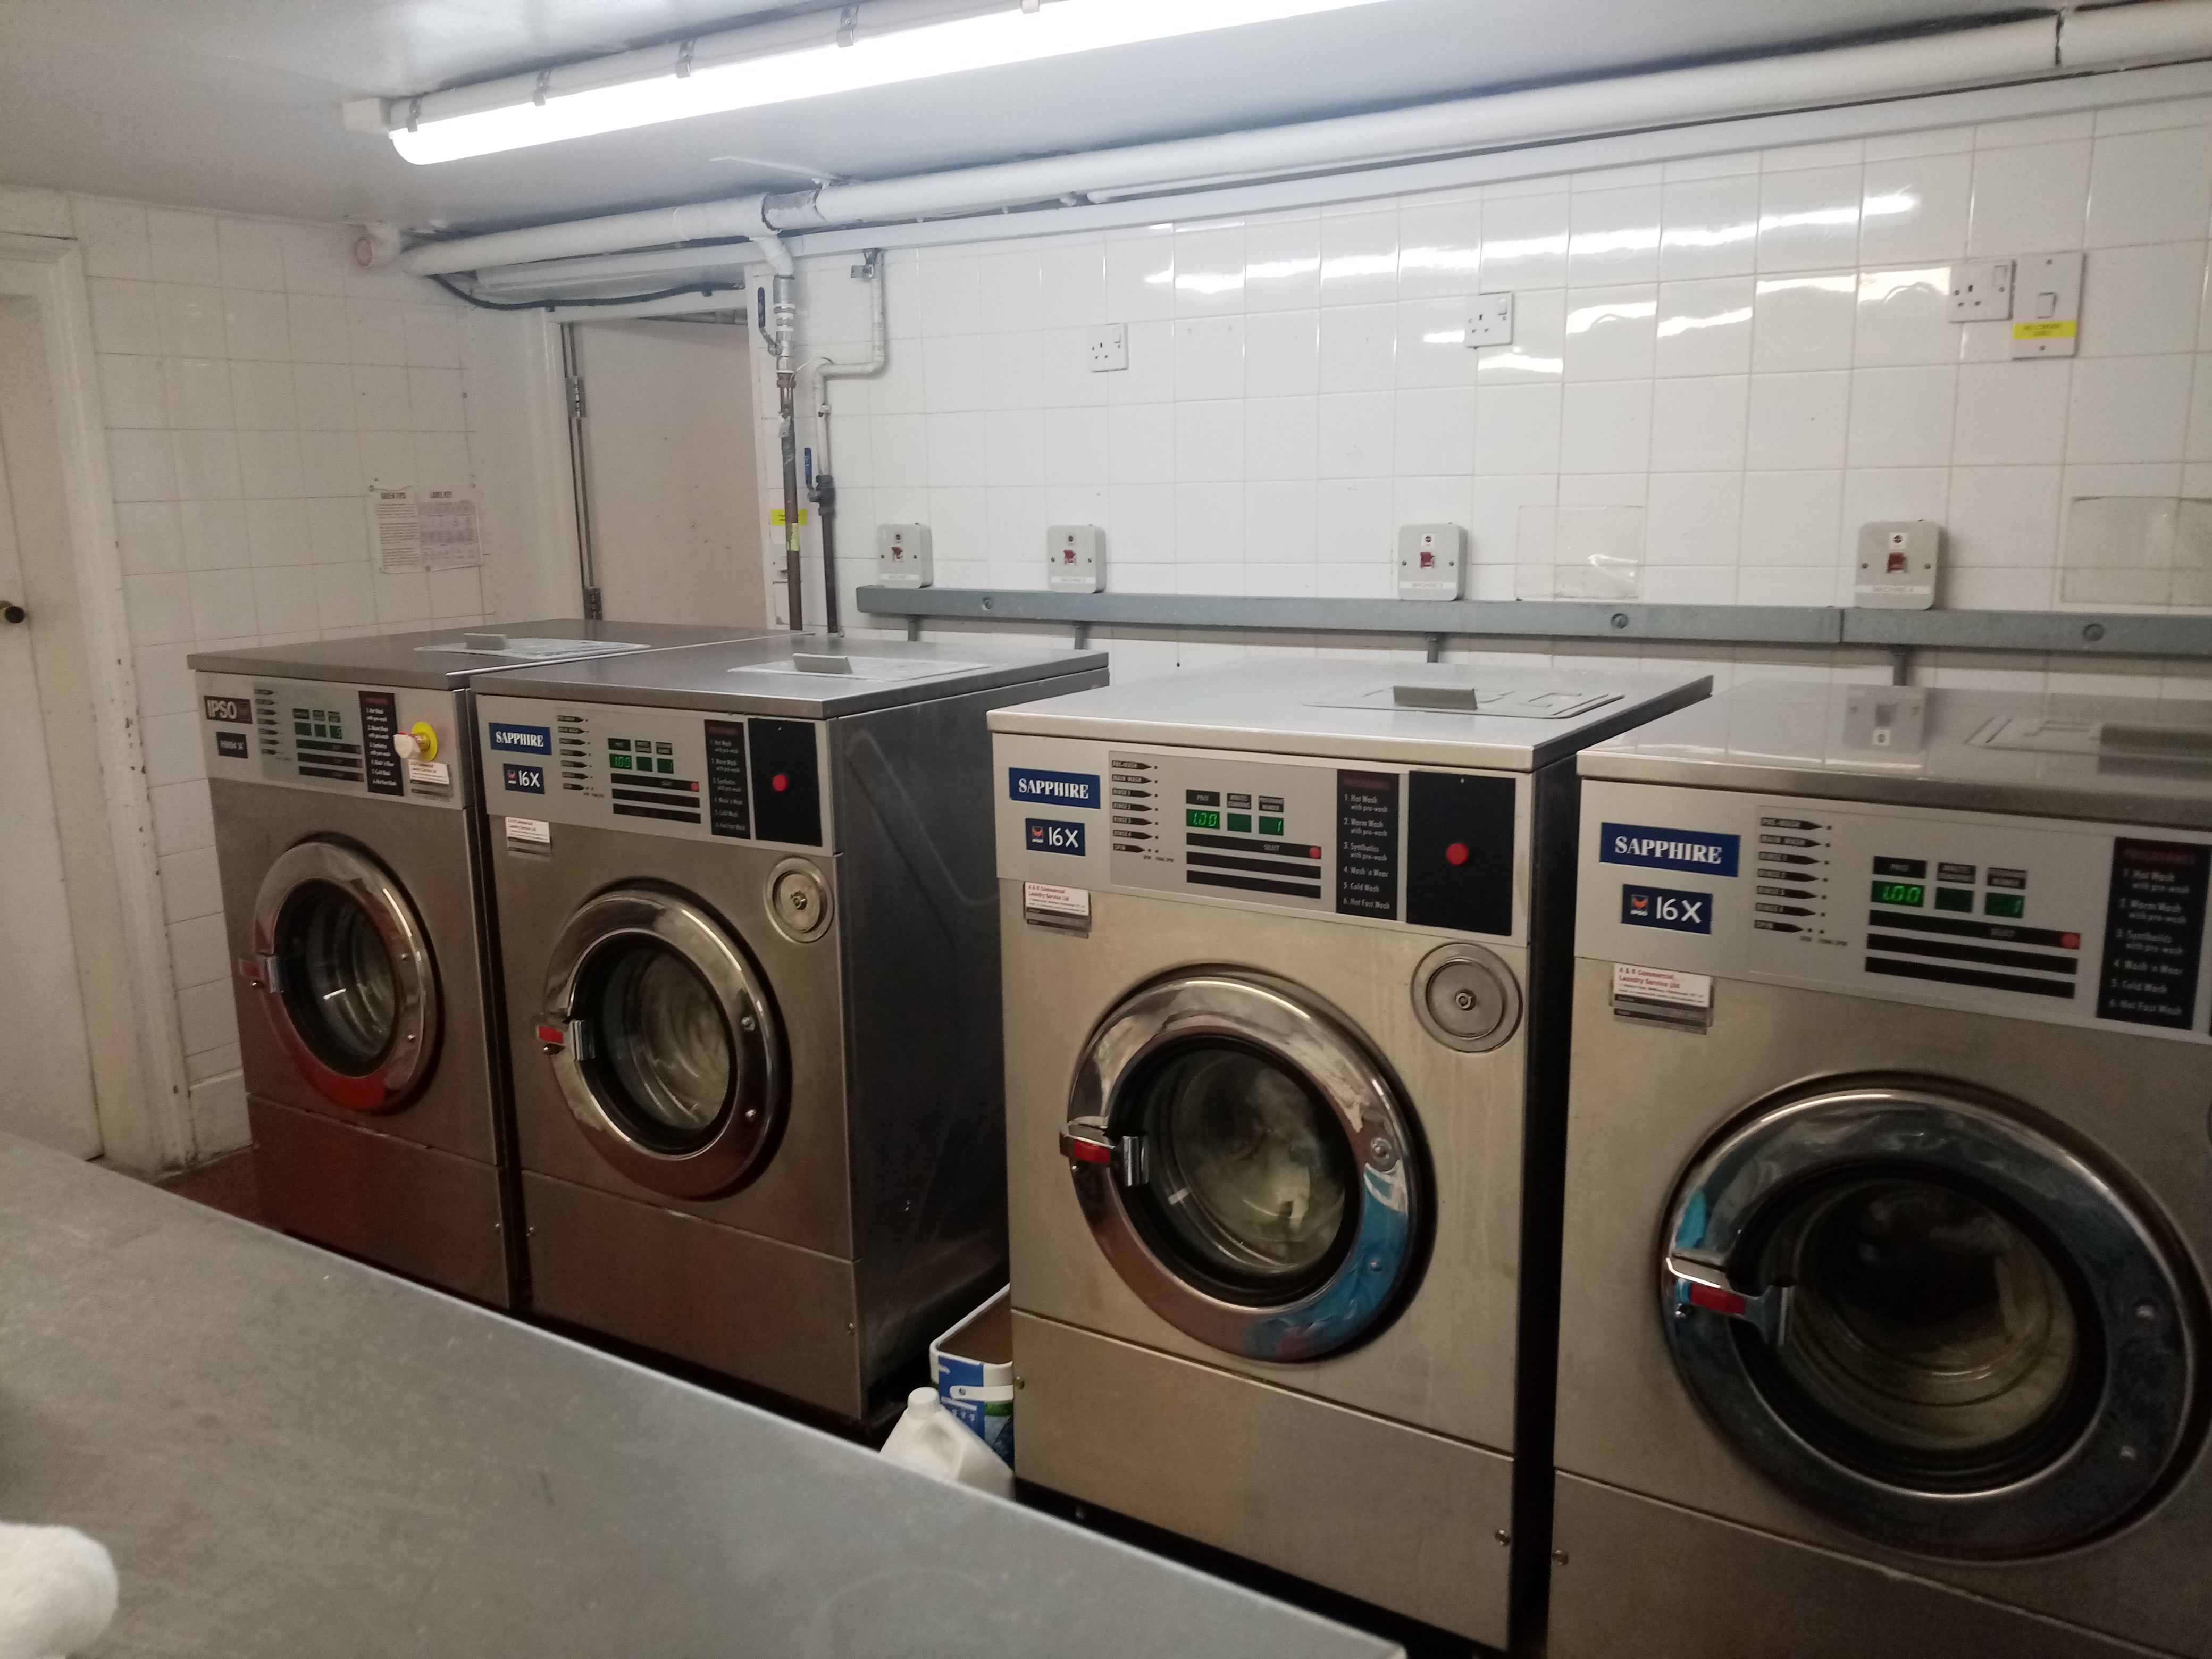 Four large washing machines